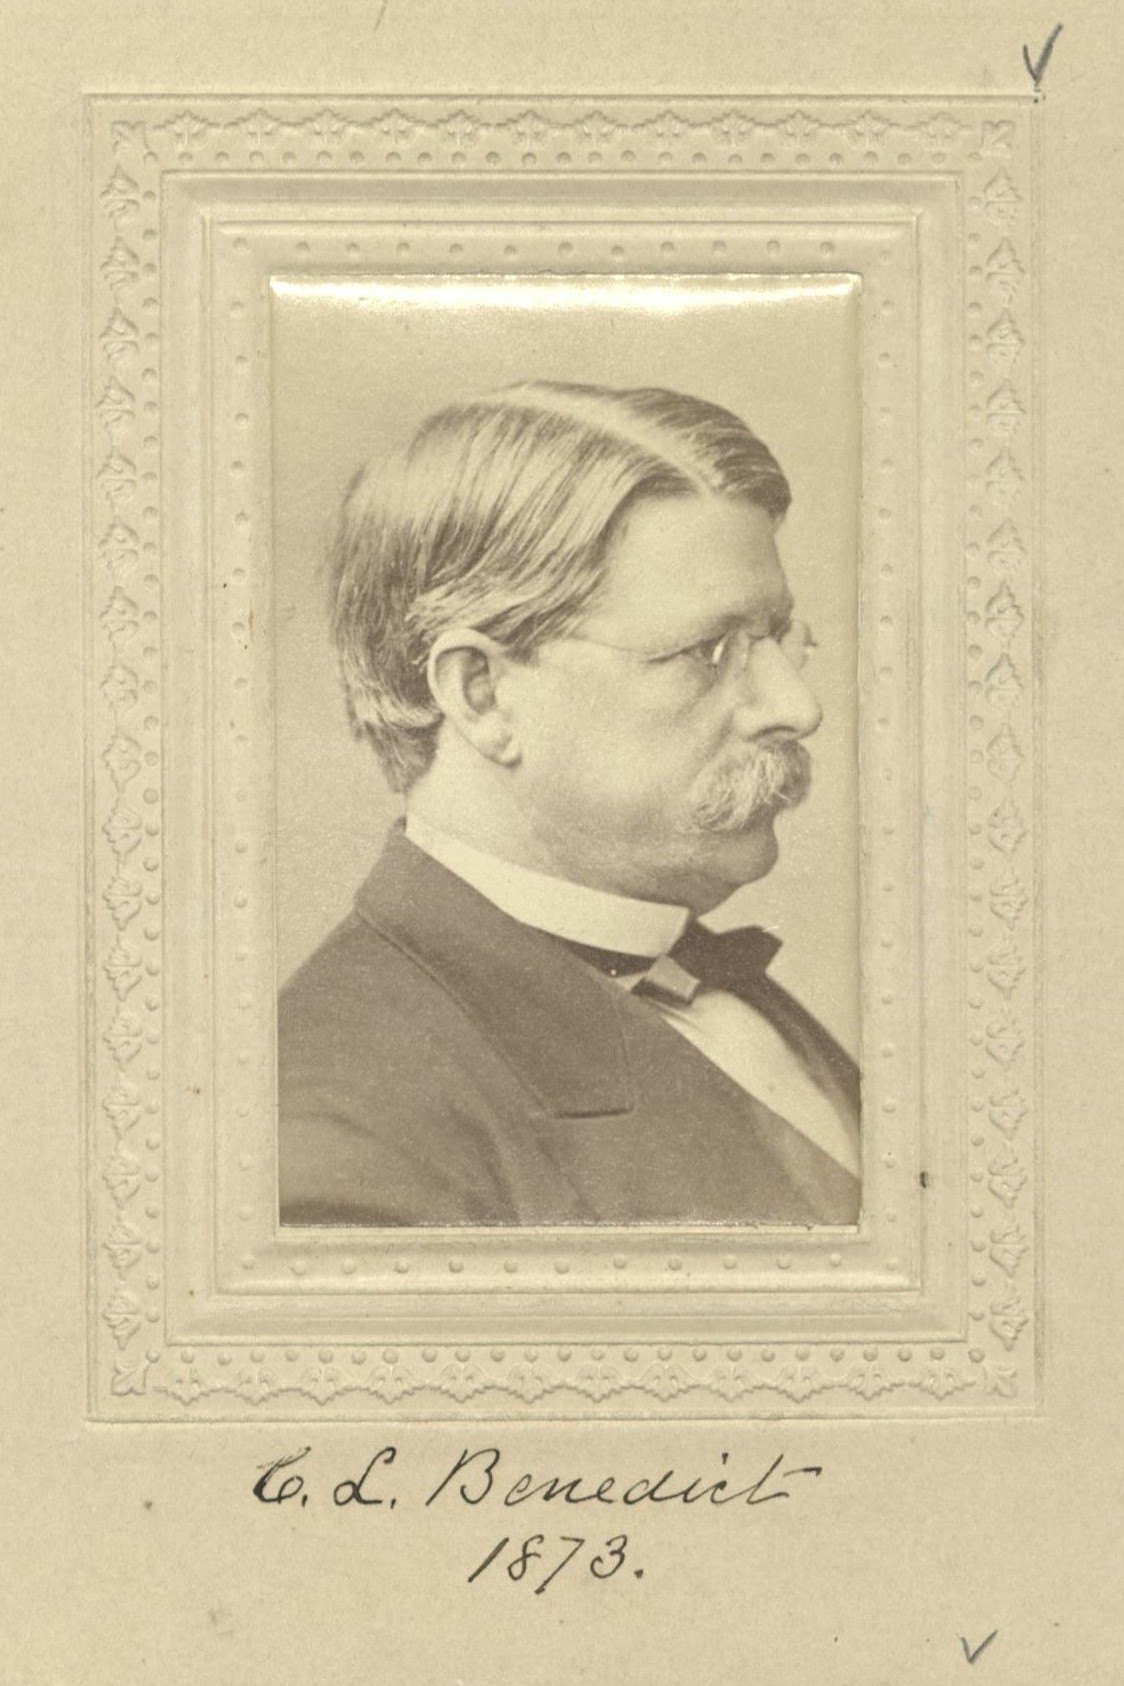 Member portrait of Charles L. Benedict